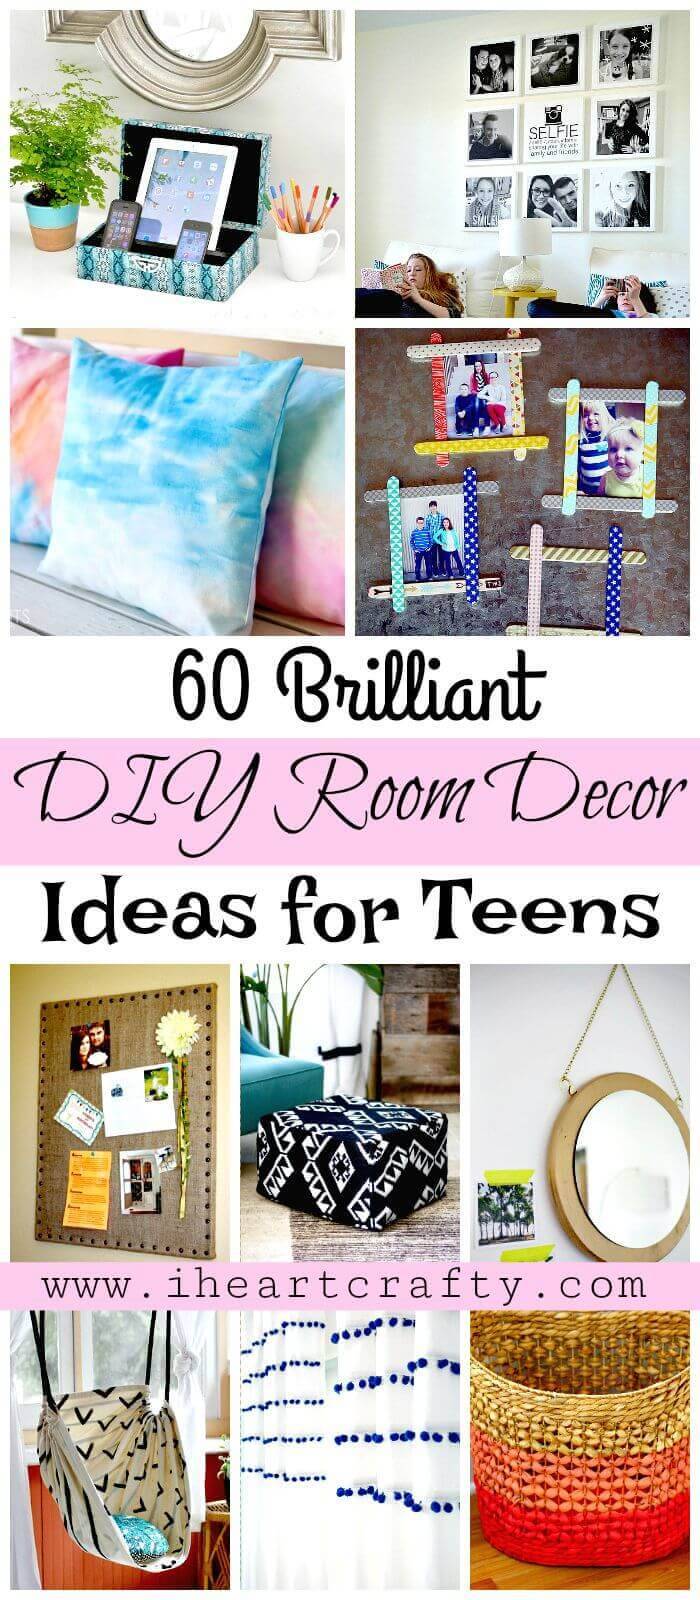 60 Brilliant Diy Room Decor Ideas For Teens Crafts - Cool Diy Room Decor Ideas